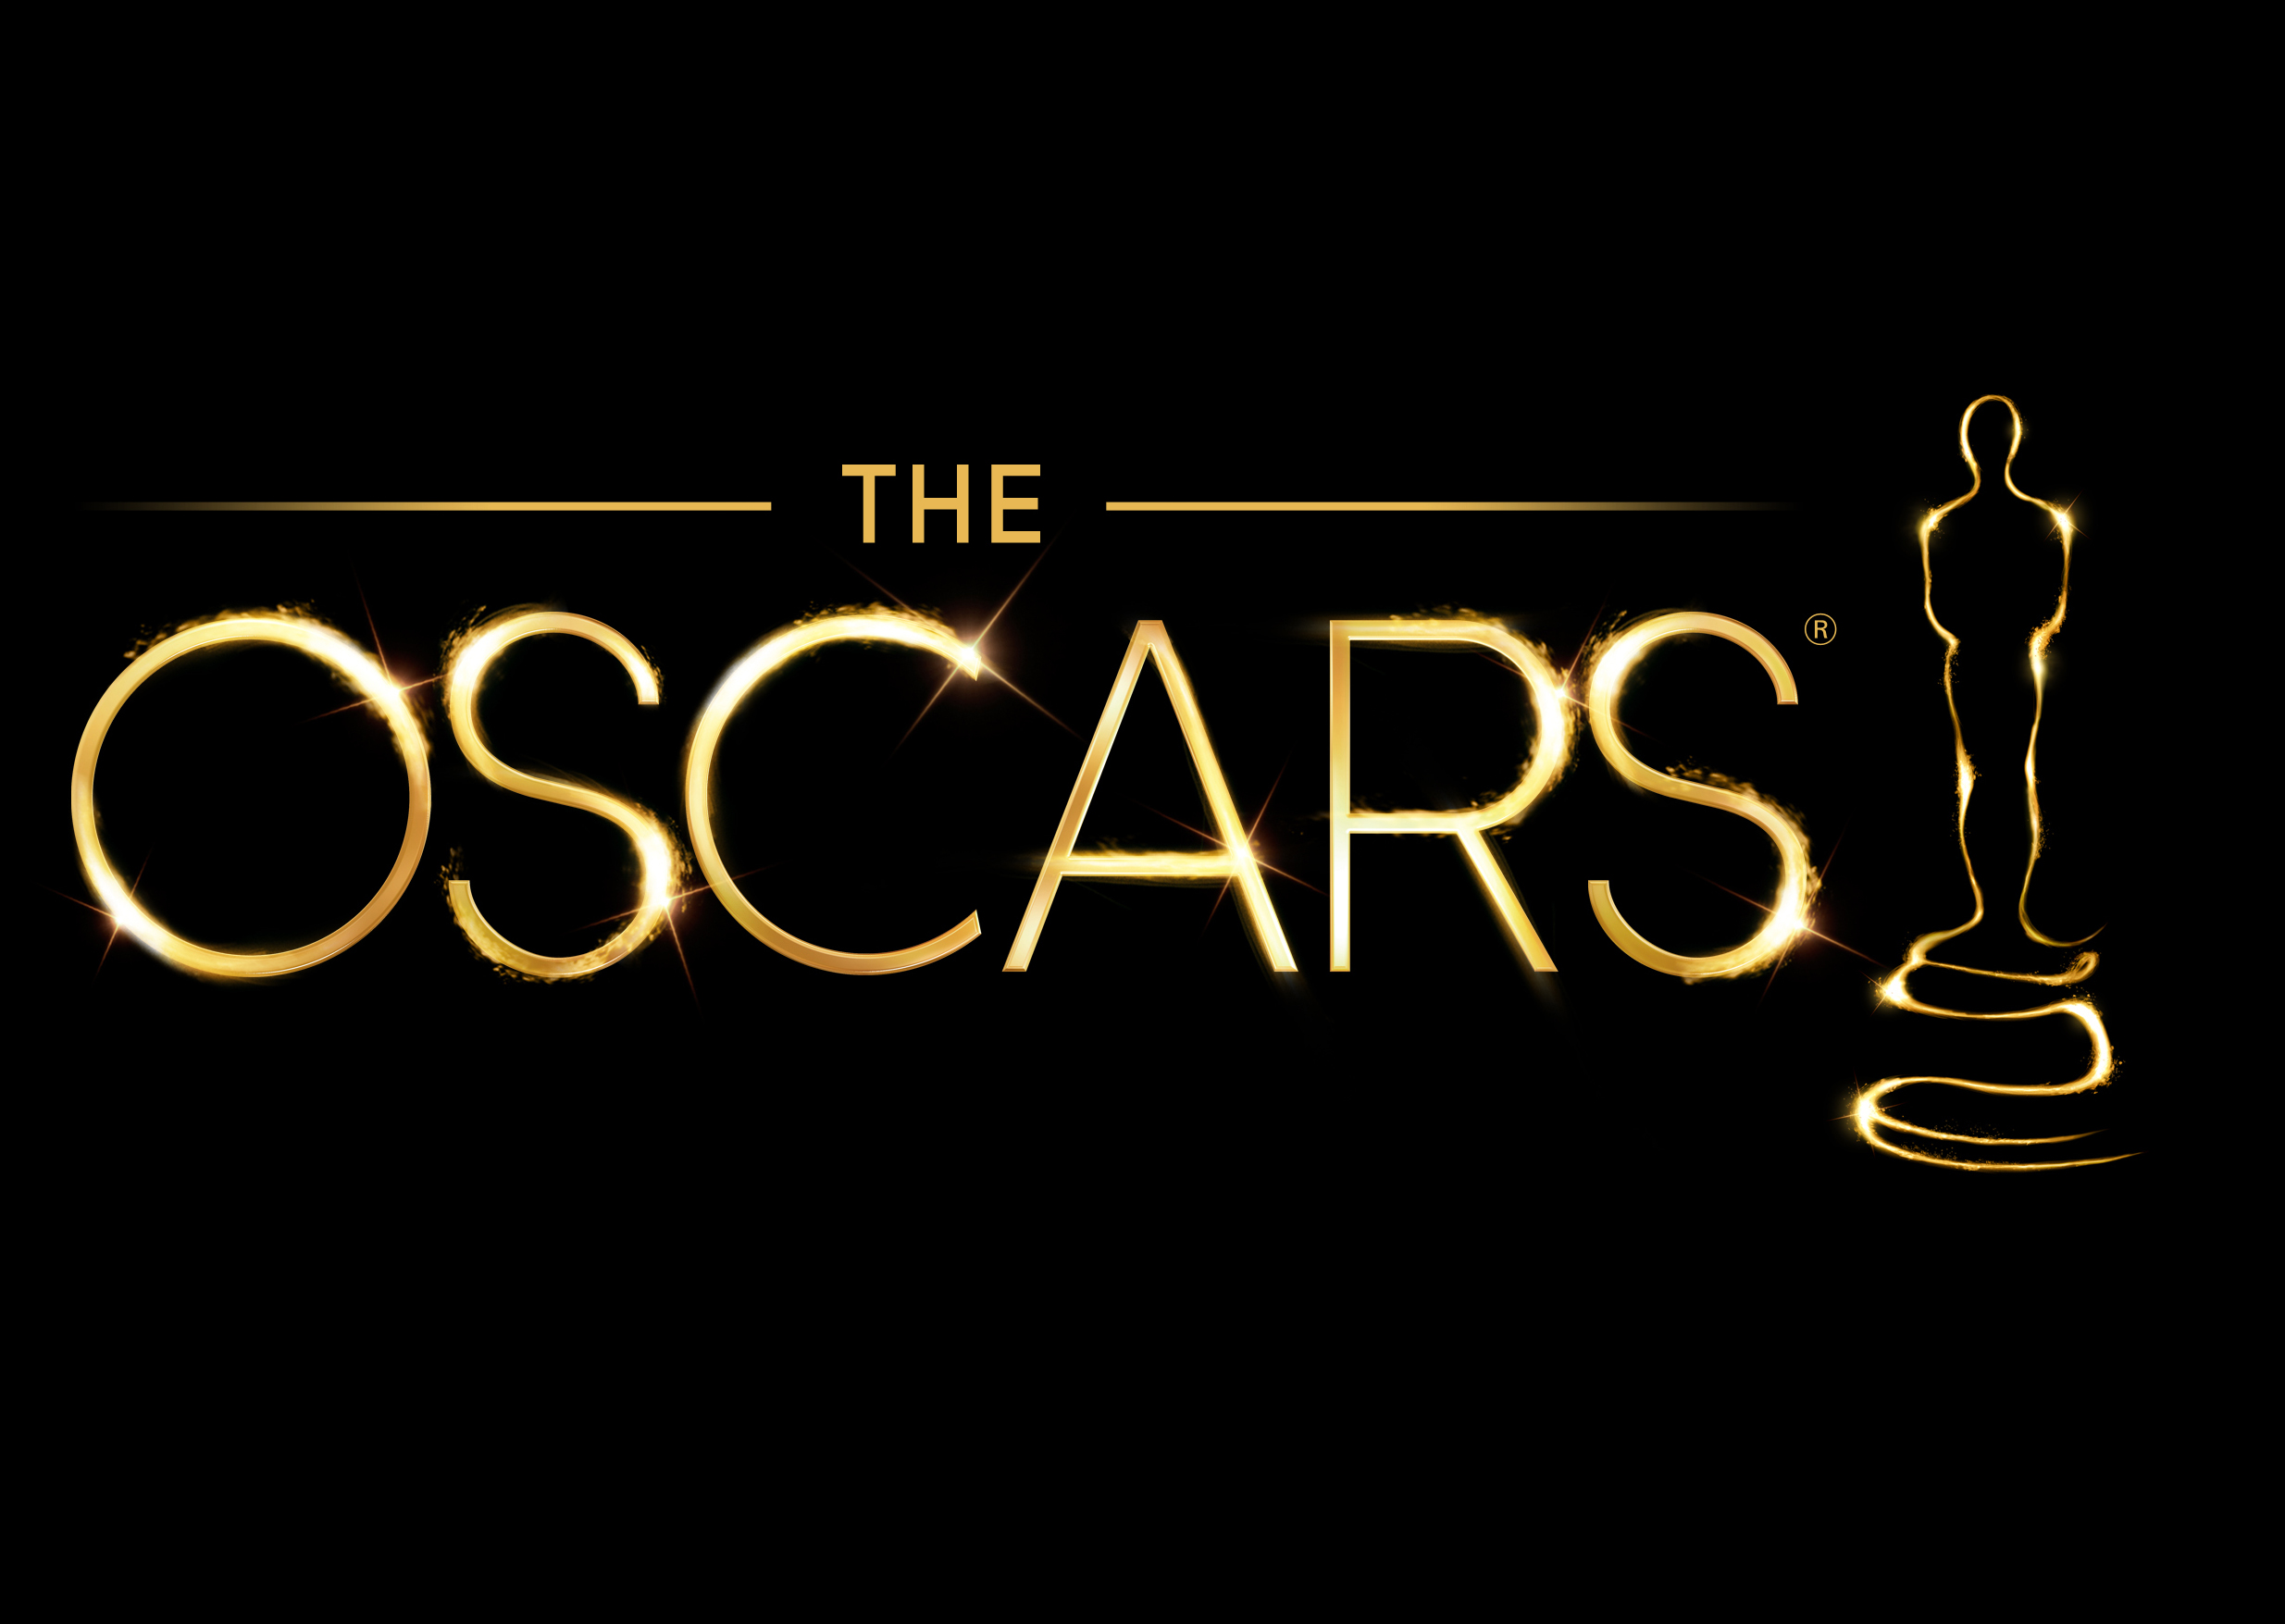 Oscars 2006 : Les nominations !